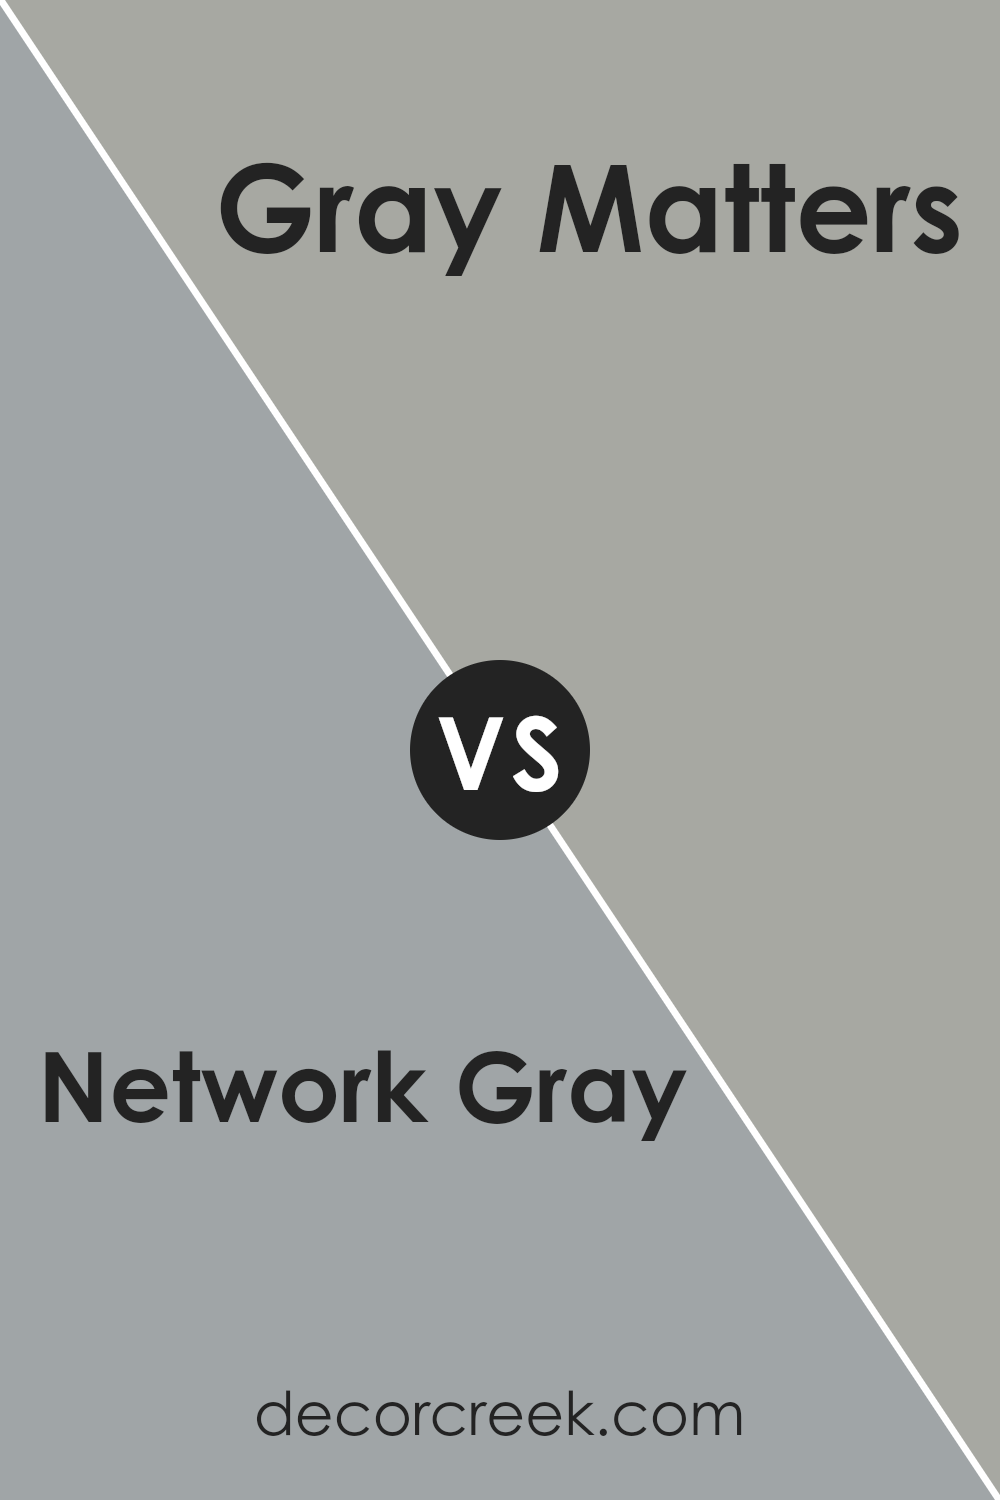 network_gray_sw_7073_vs_gray_matters_sw_7066